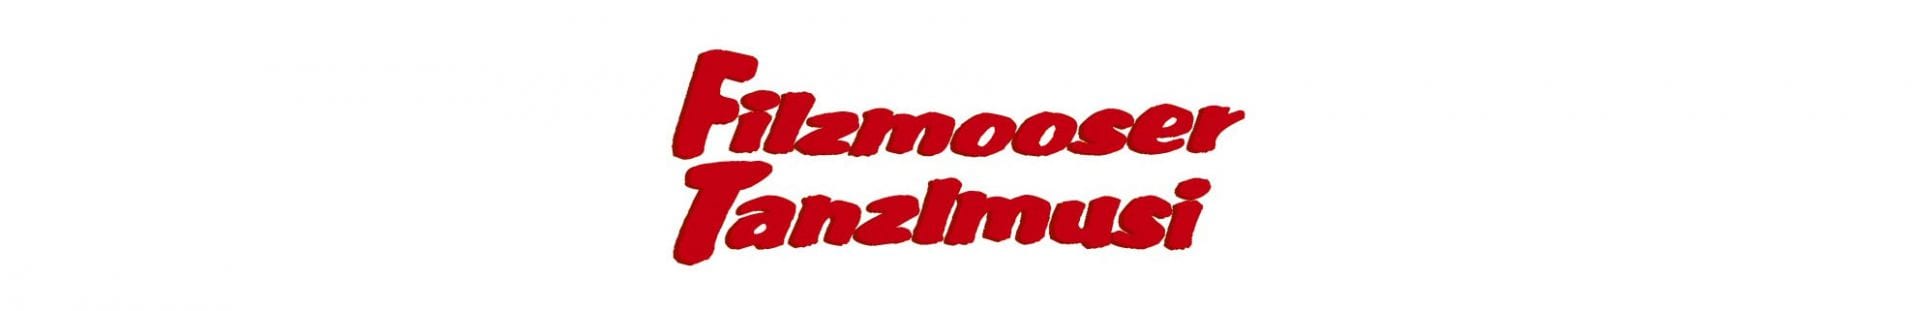 Filzmooser-Logo-neu